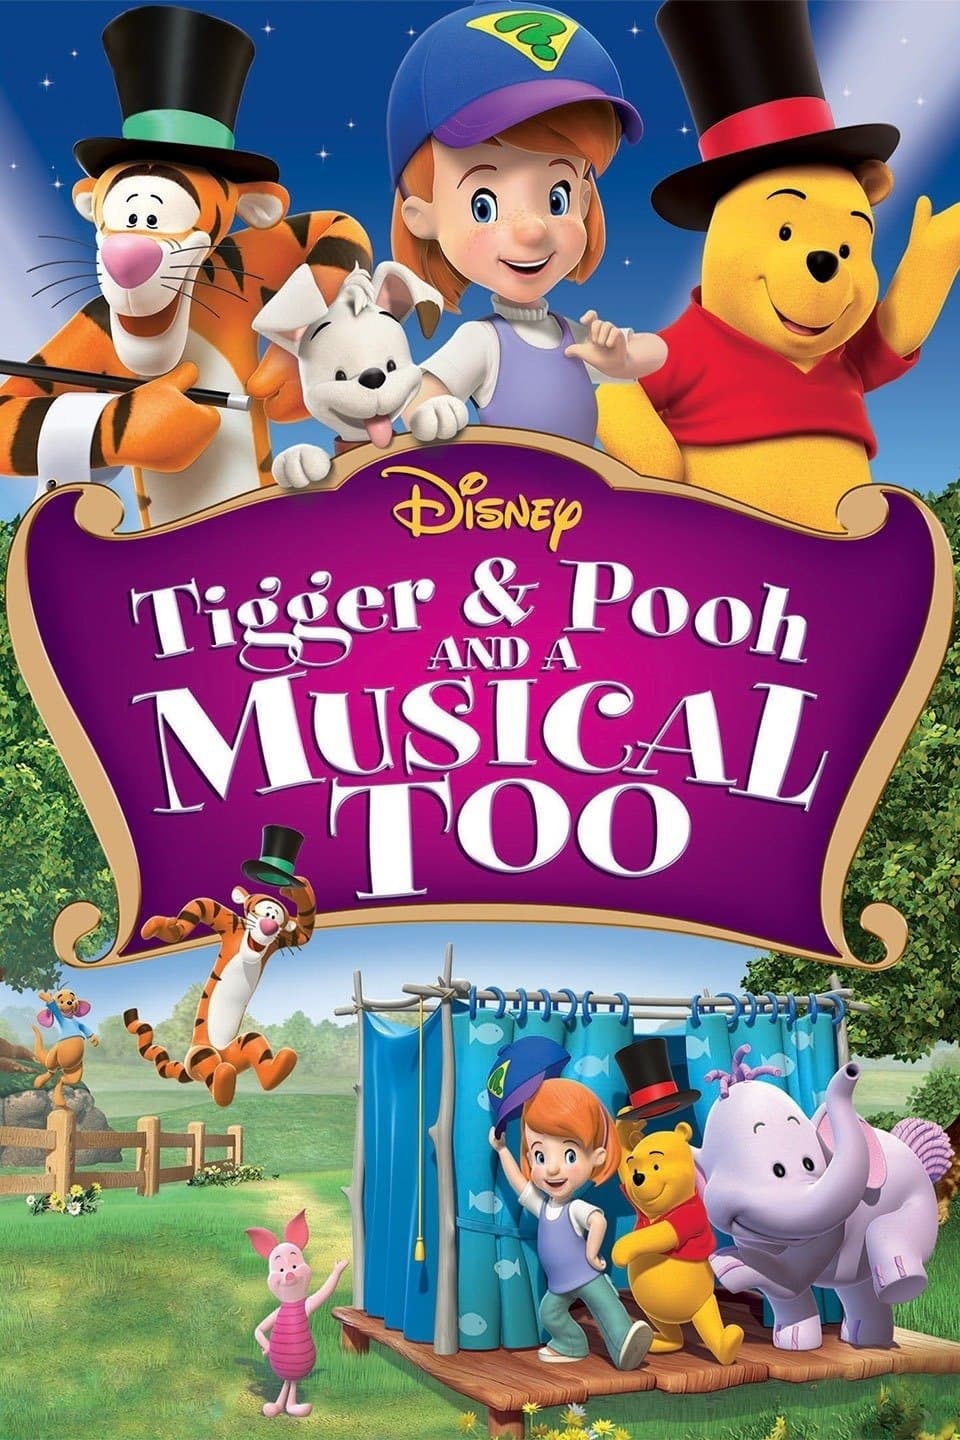 Tigger & Pooh and a Musical Too (2009)